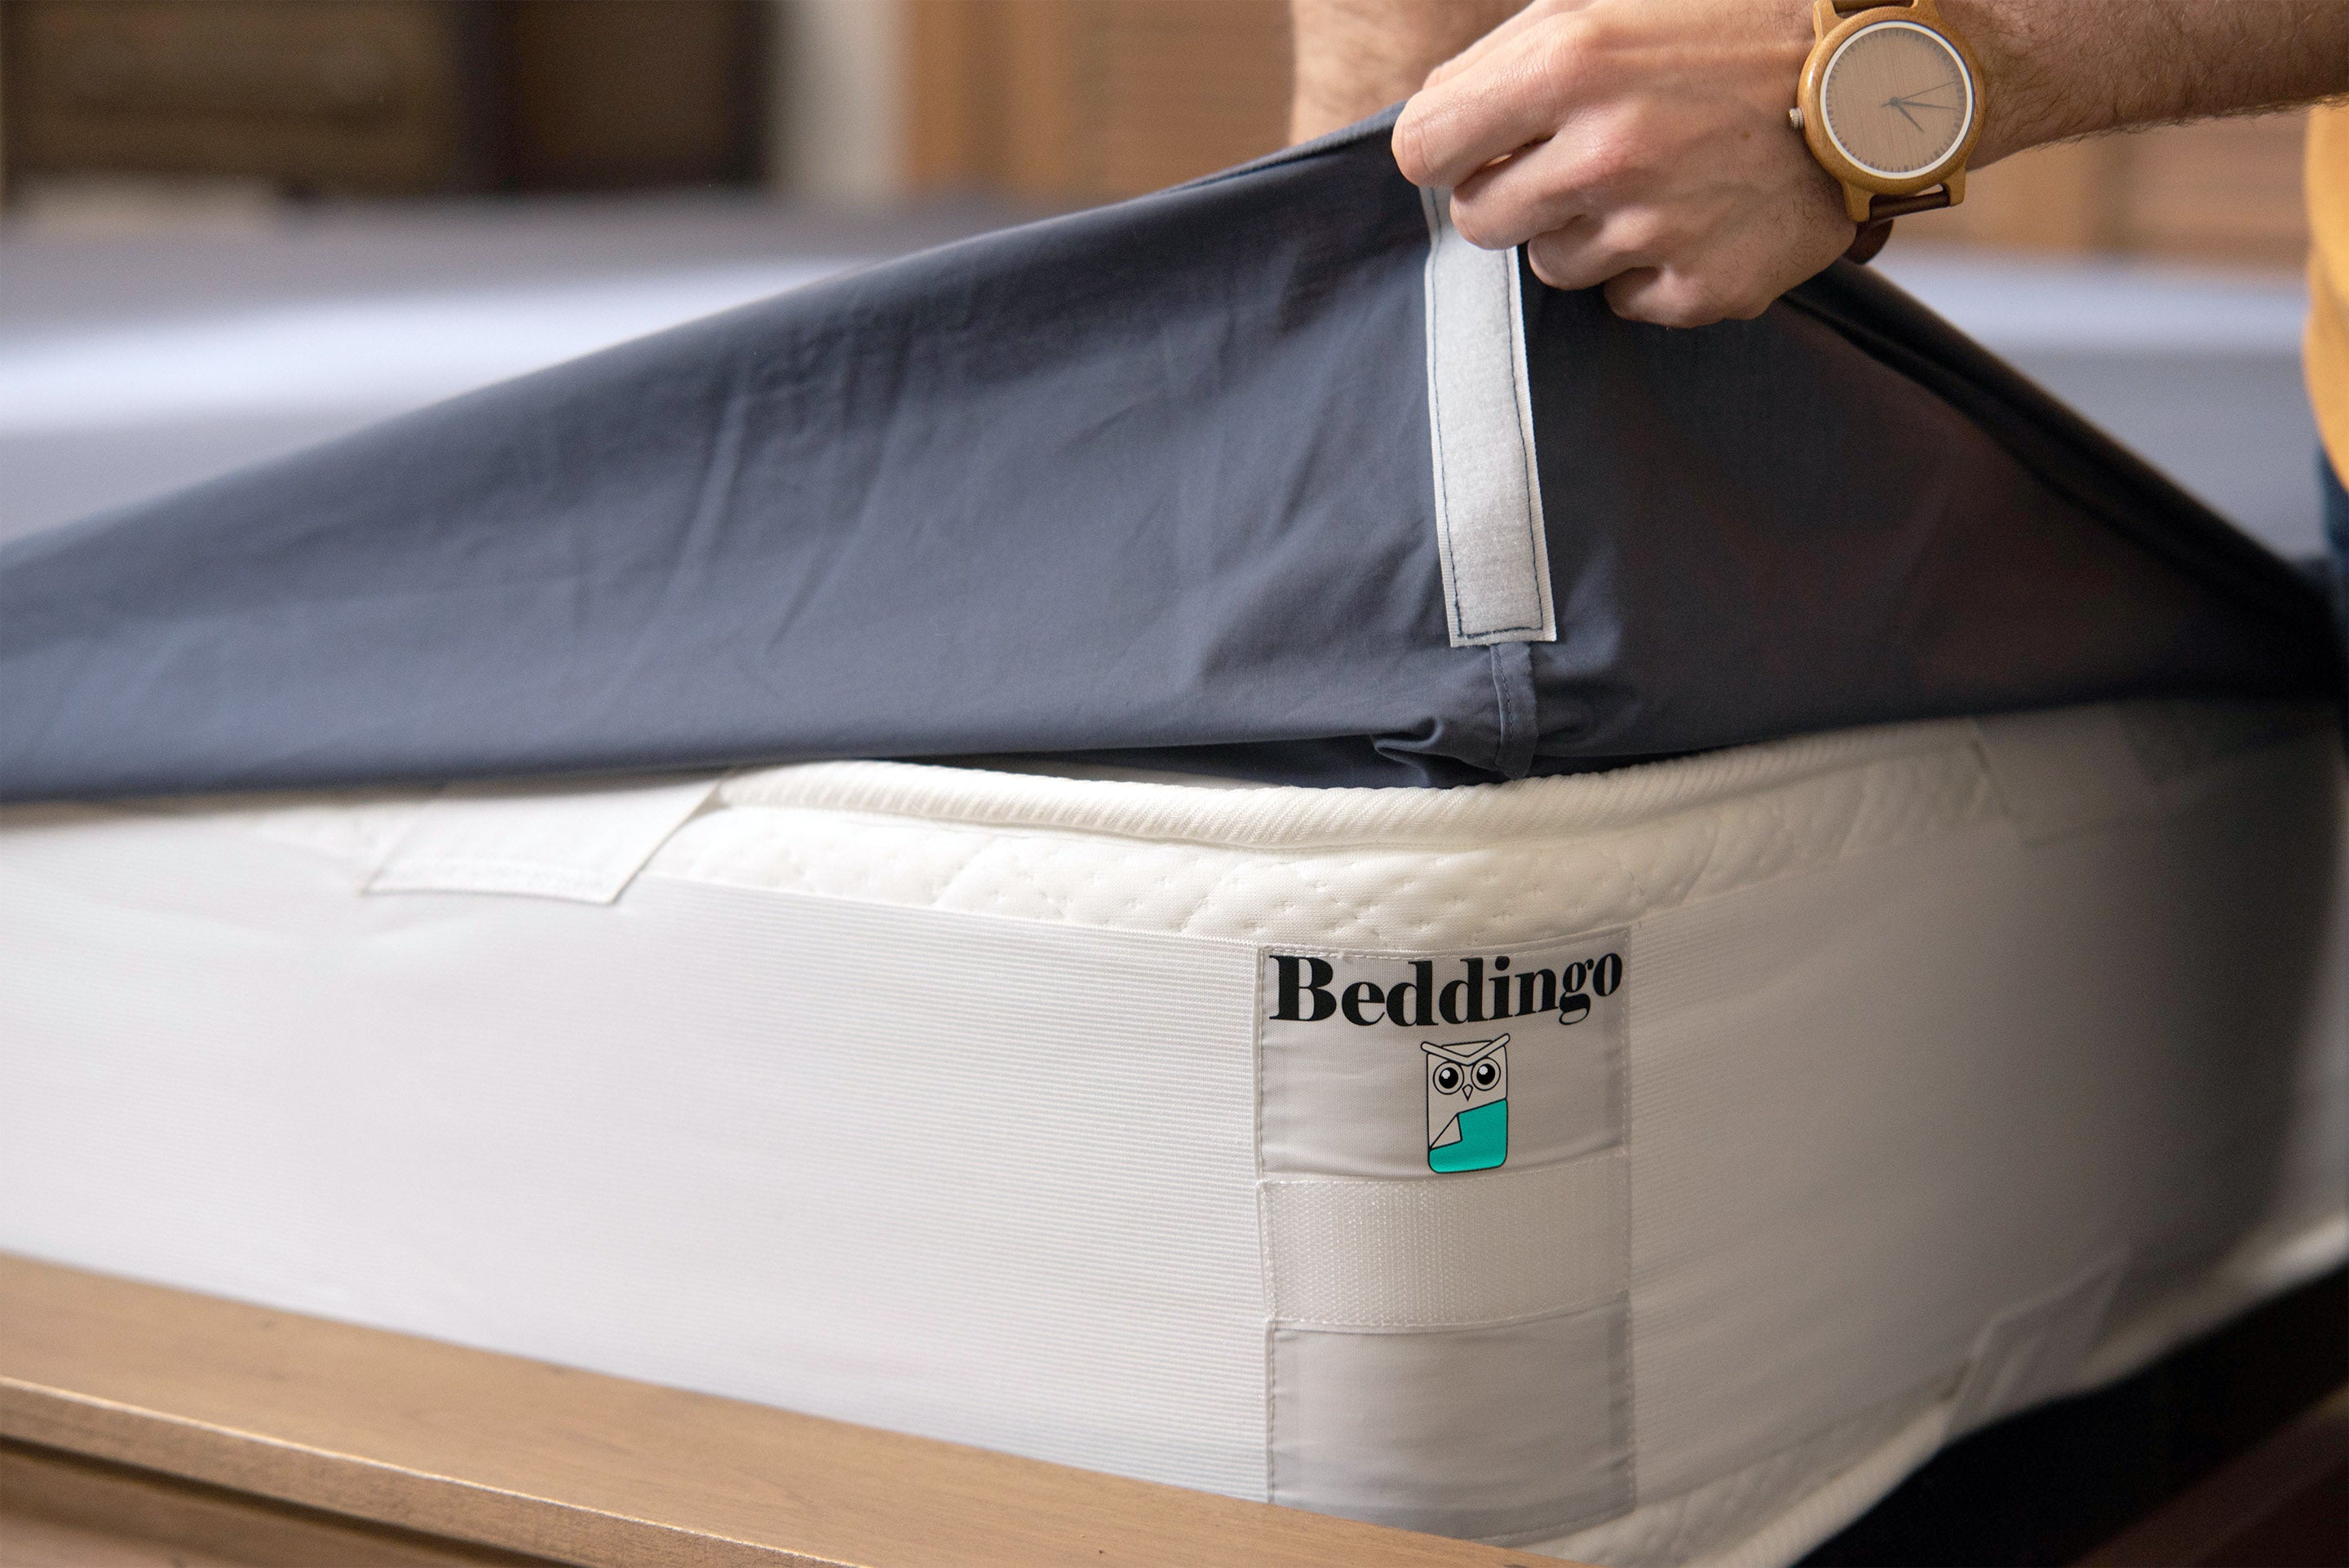 Beddingo - Innovative Bed Sheets